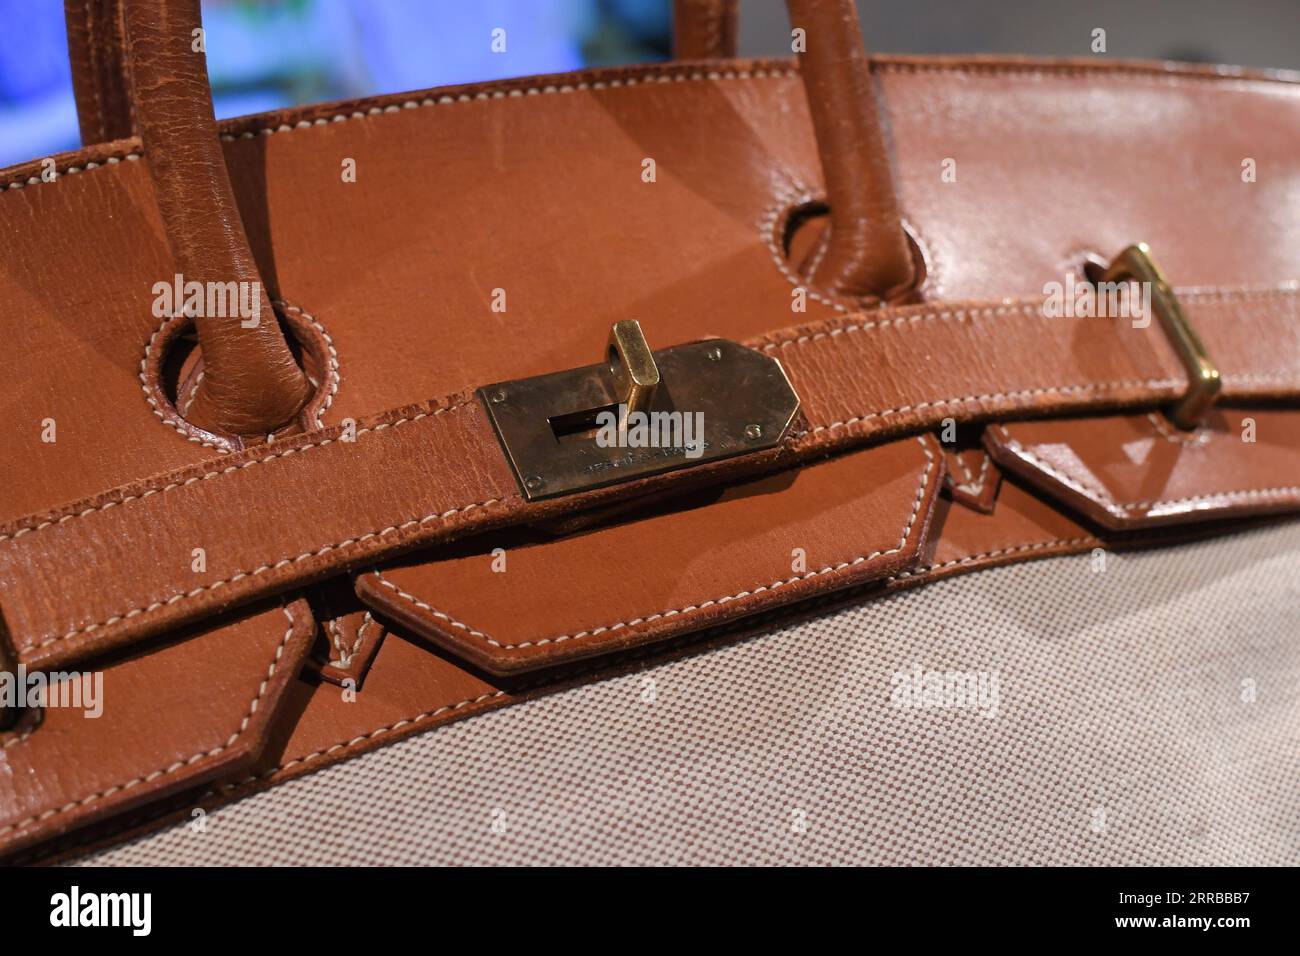 Hermès Birkin Fauve Barenia Handbag